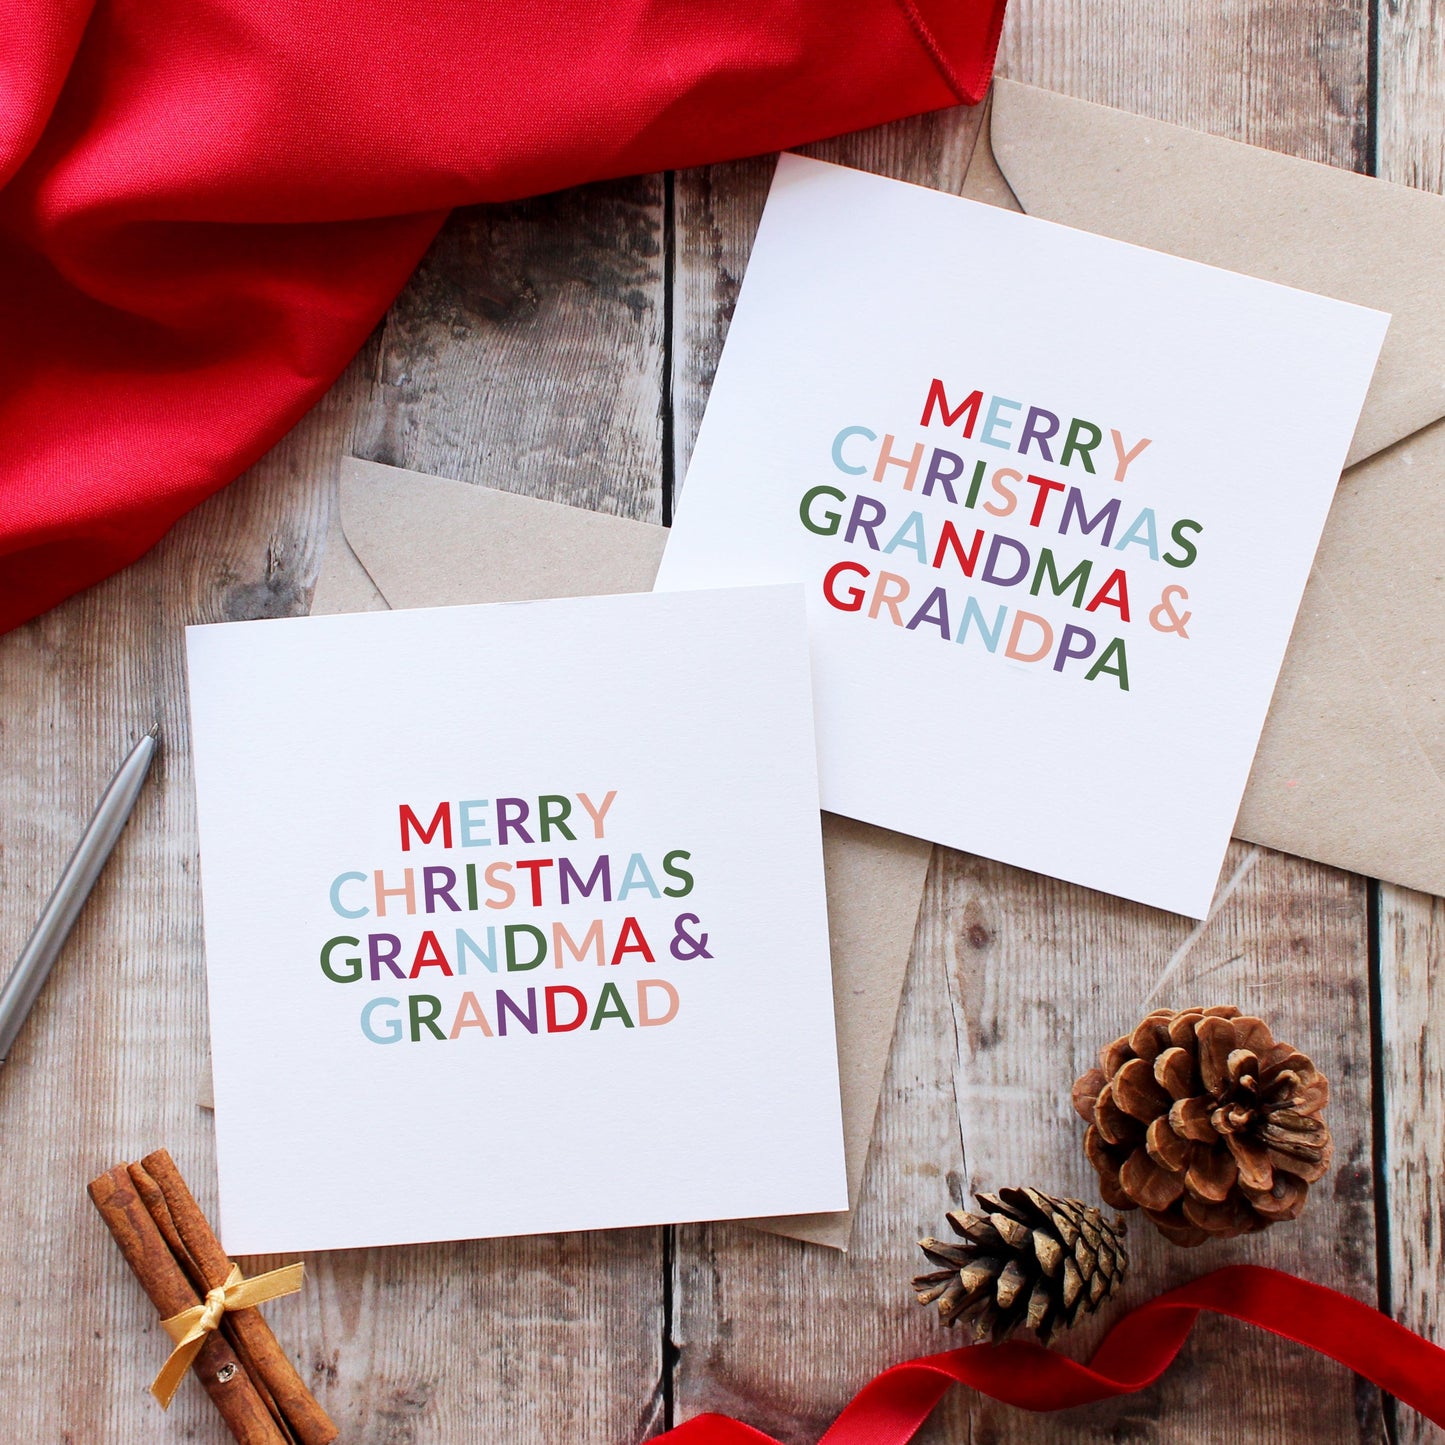 Grandma and grandad Christmas card from Purple Tree Designs